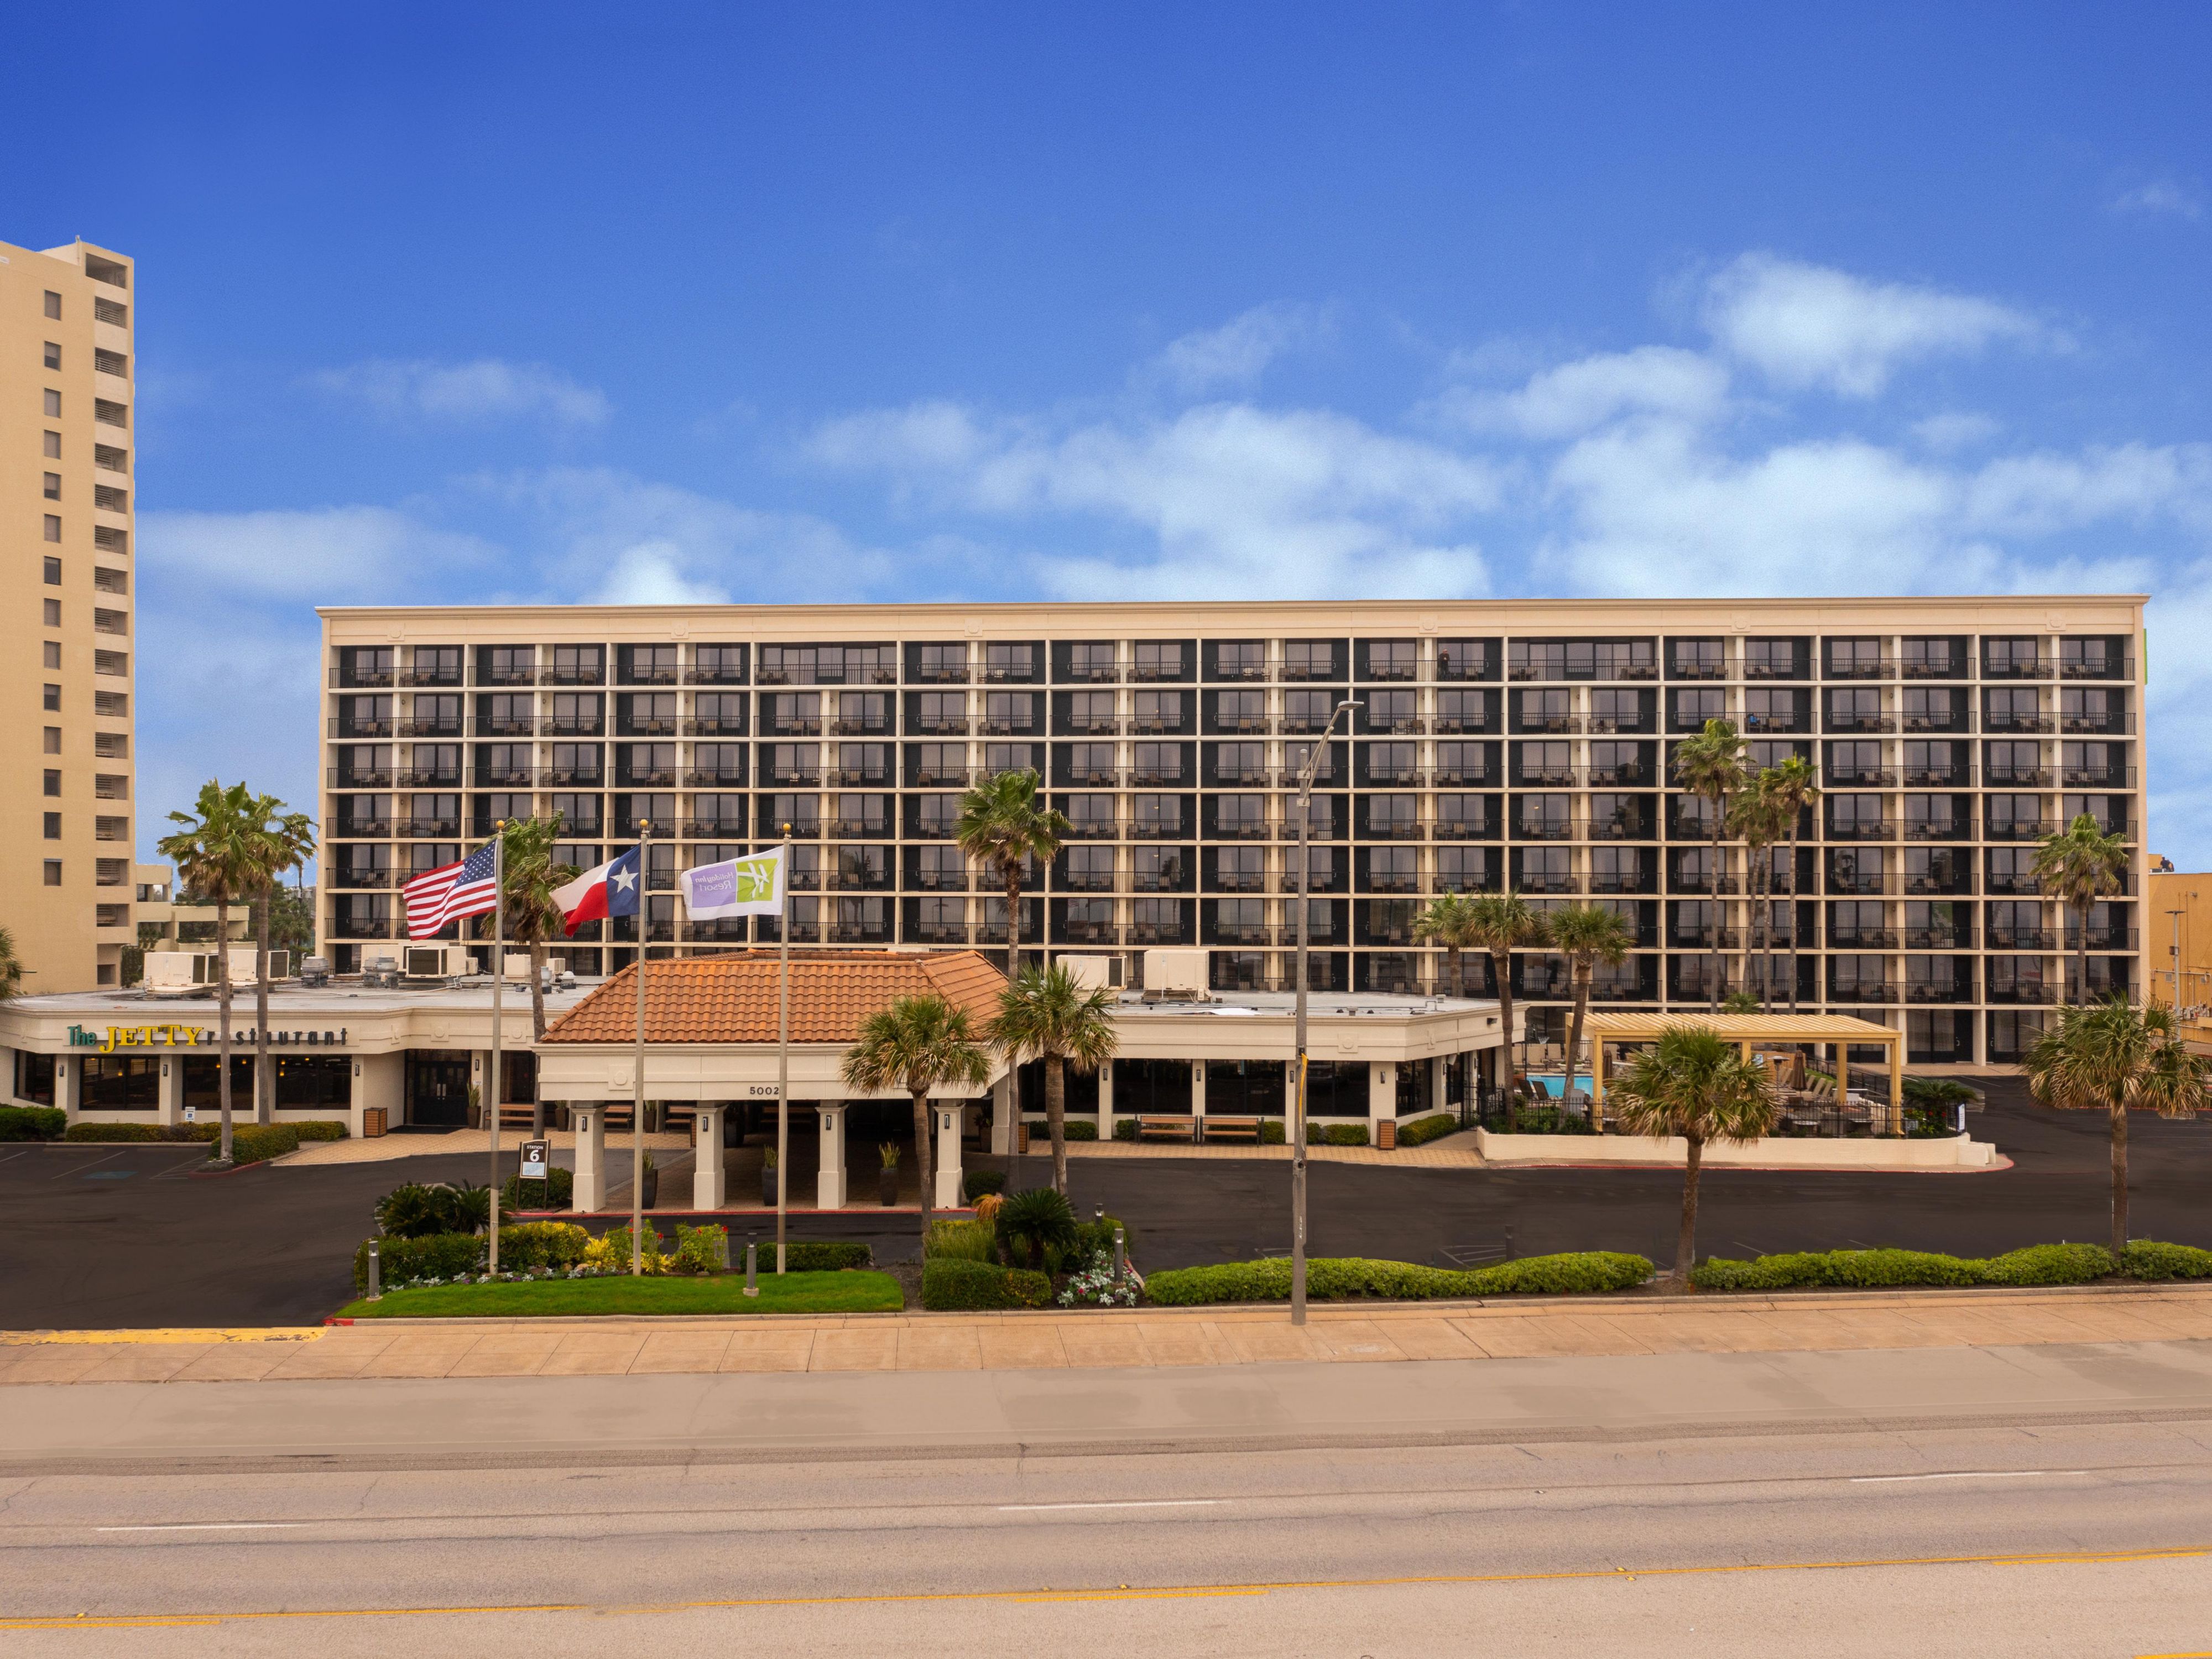 Top Hotels near The Spot, Galveston (TX) for 2023